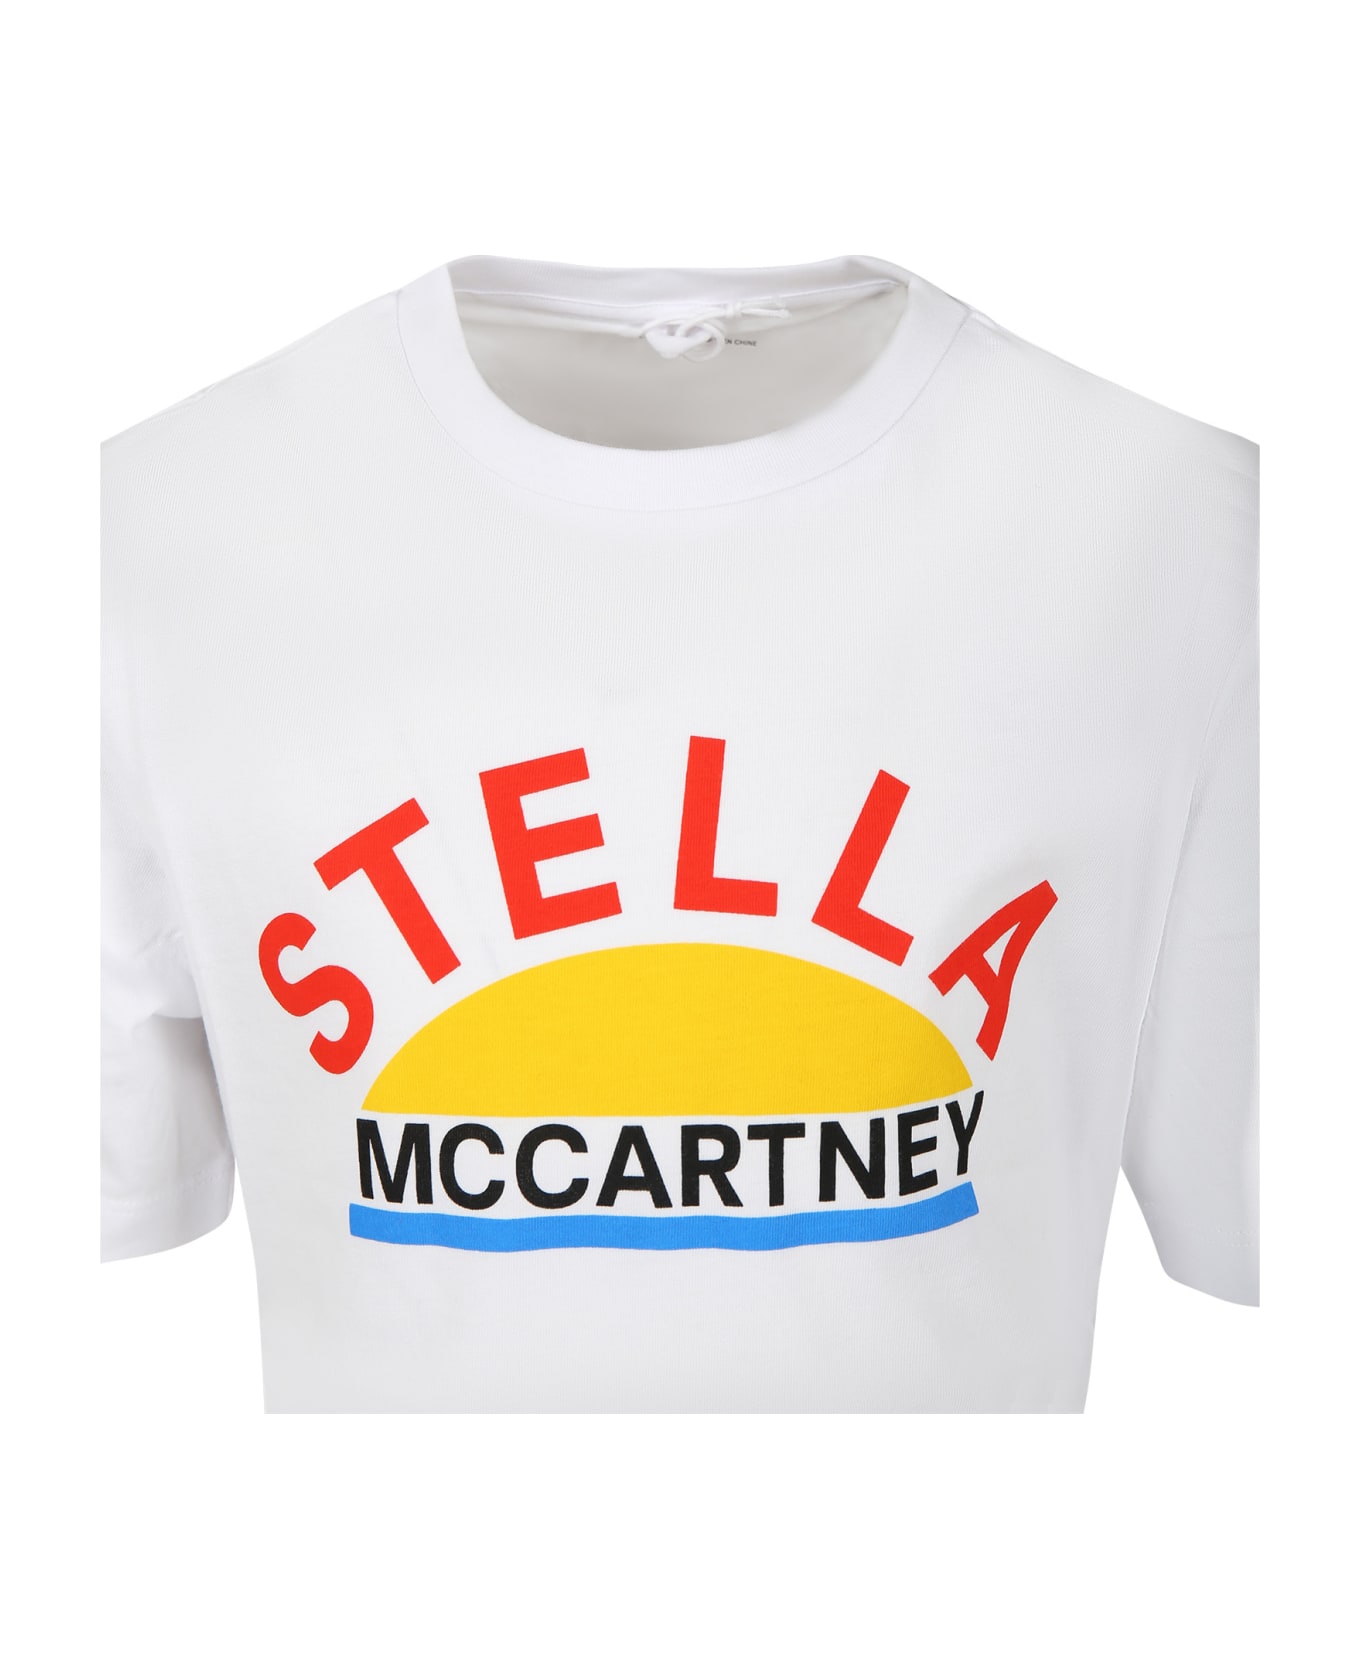 Stella McCartney Kids White T-shirt For Girl With Multicolor Print - White